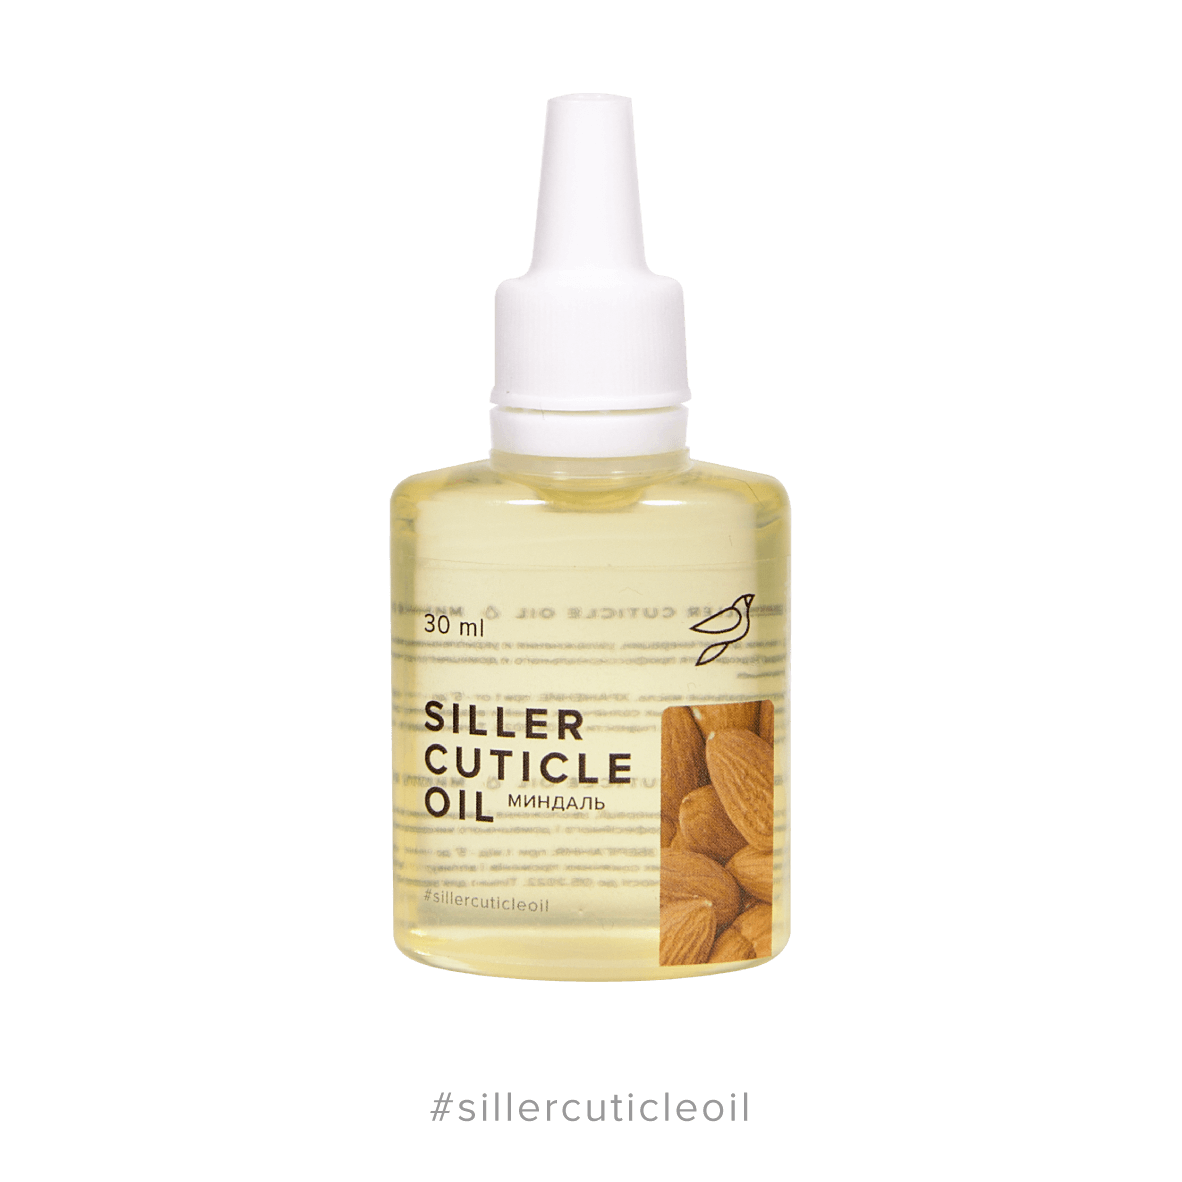 Siller Cuticle Oil - Almond